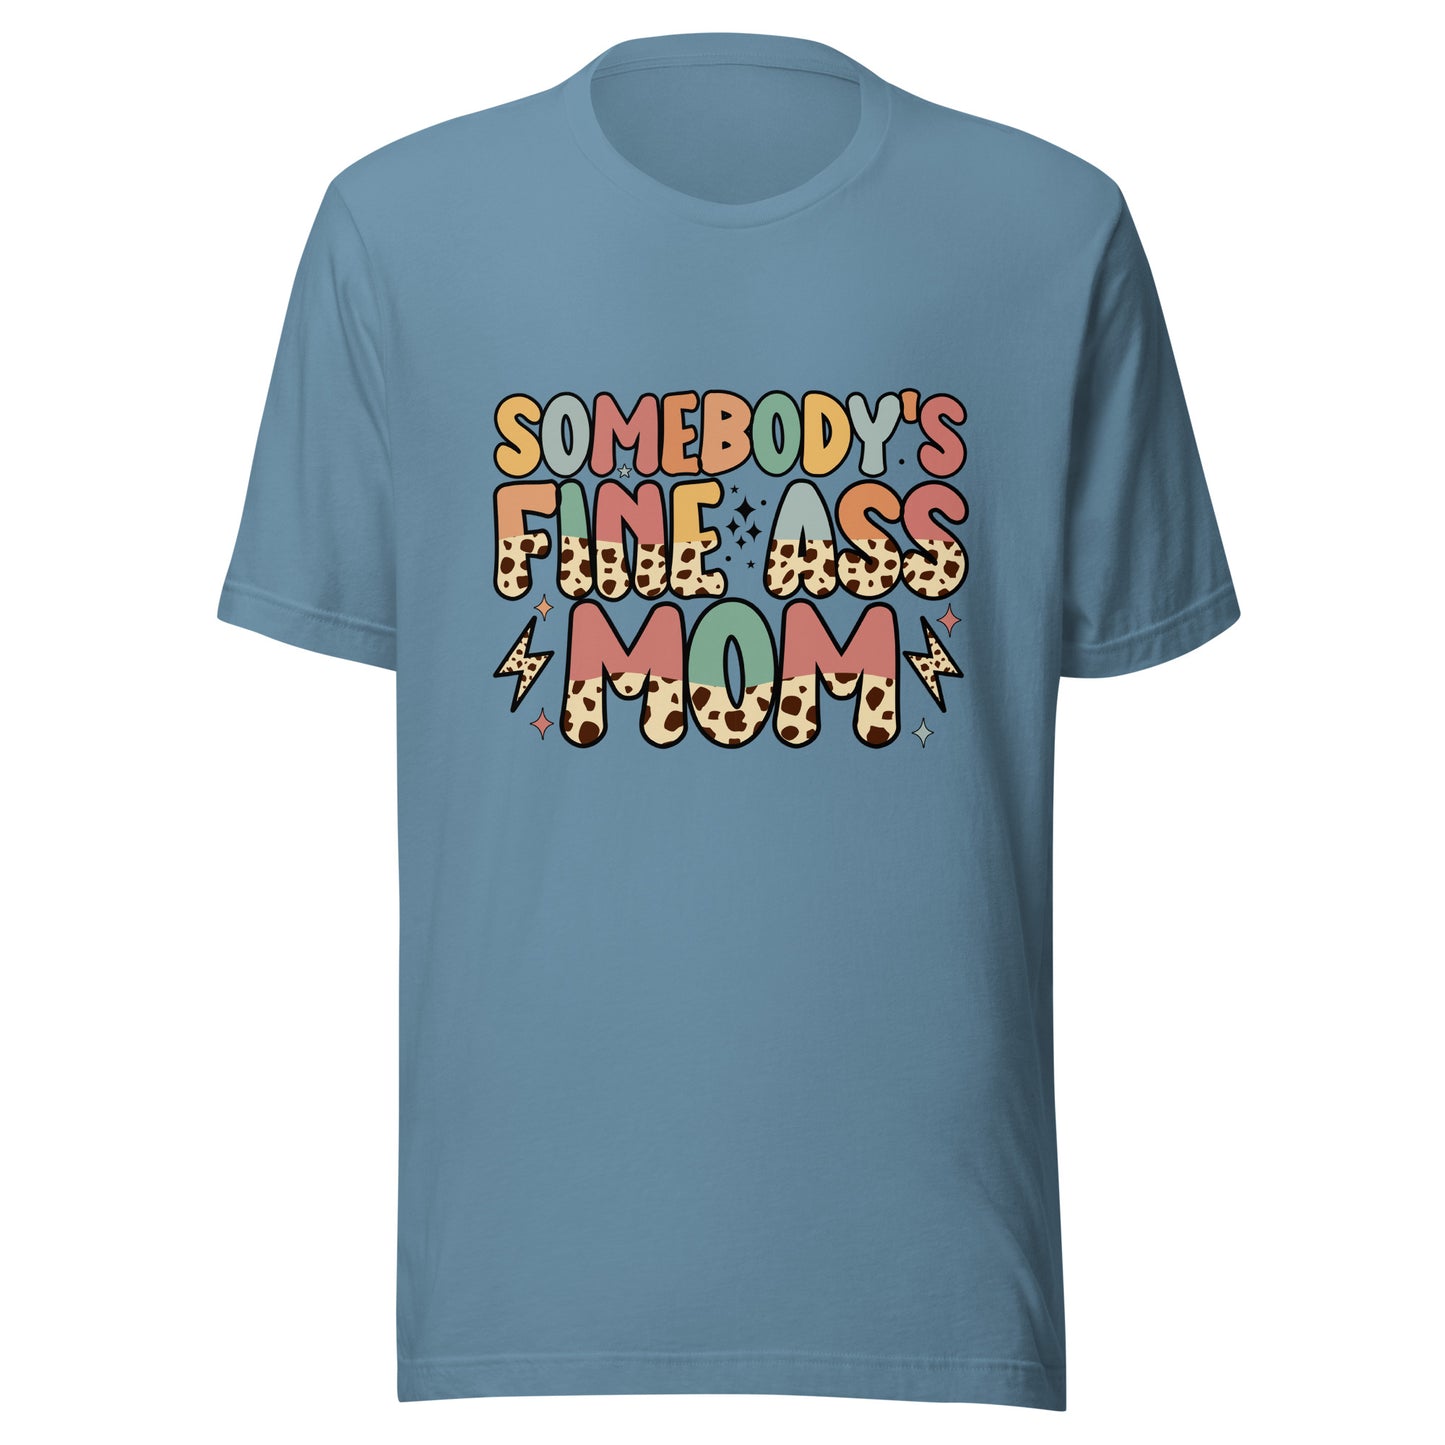 Somebody's fine ass mom  t-shirt